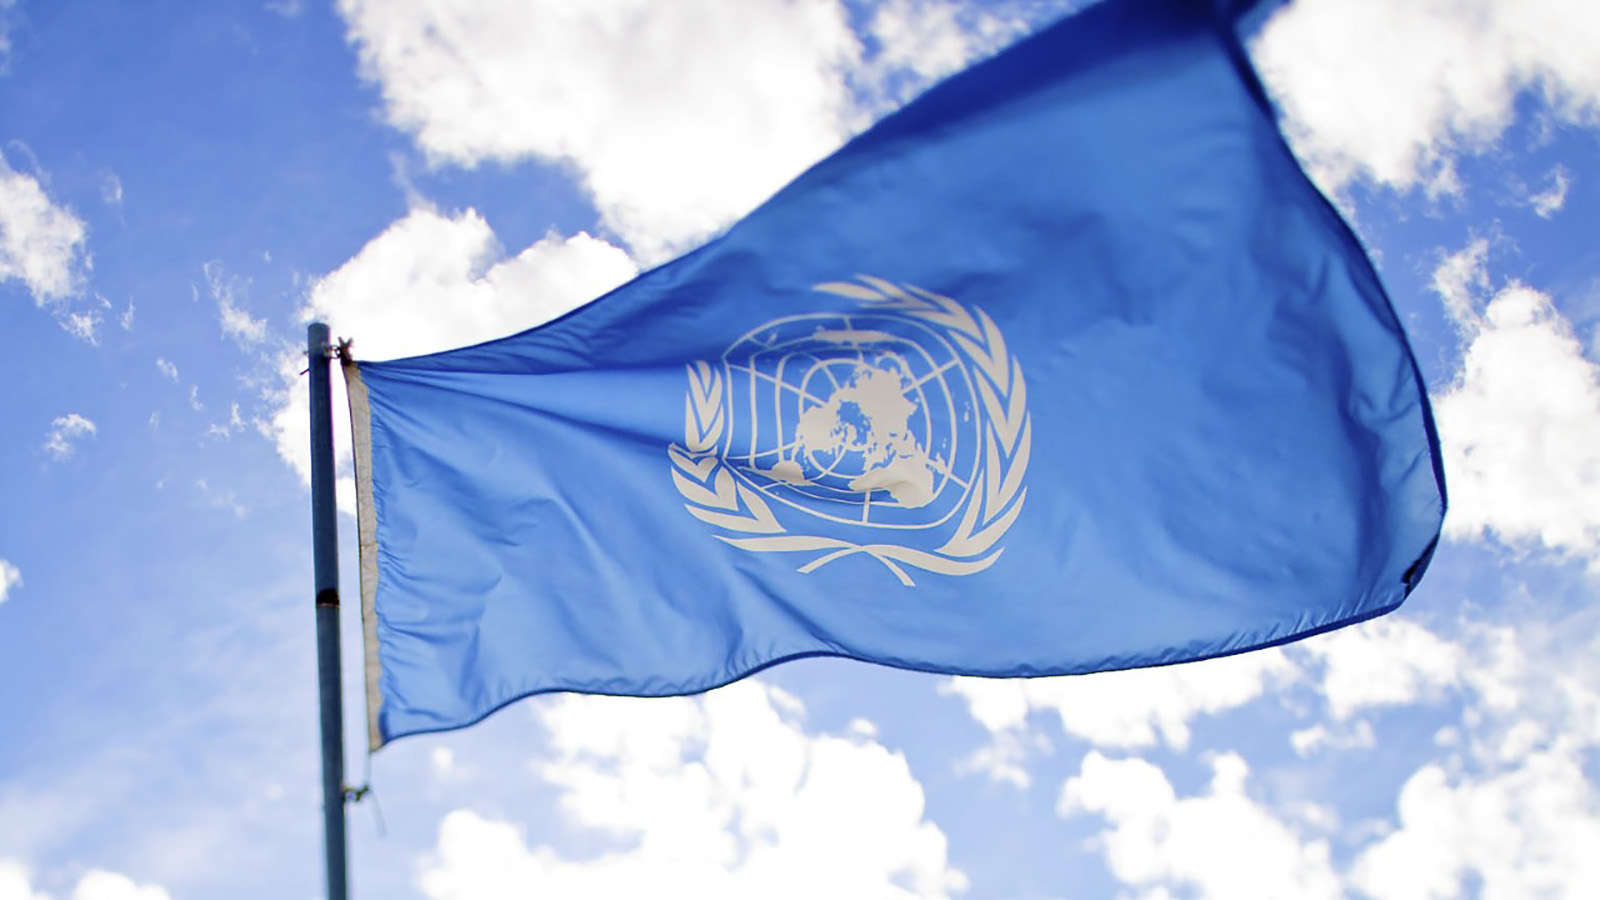 [Translate to english:] sanjitbakshi united nations flag flickr.com(CC BY 2.0)